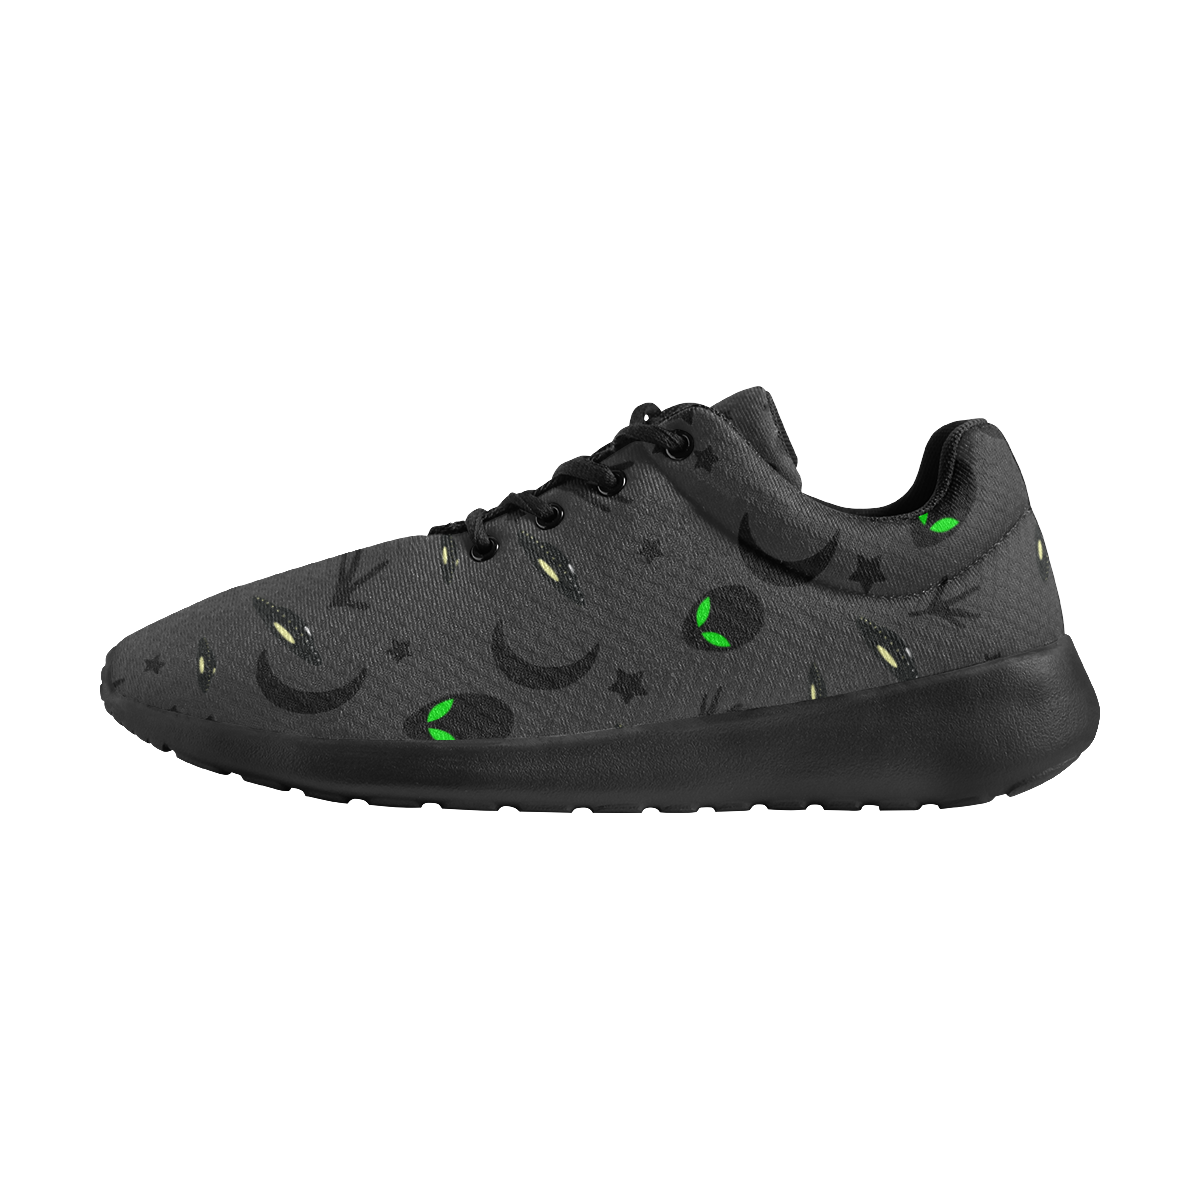 Alien Flying Saucers Stars Pattern (Charcoal/Black) Men's Athletic Shoes (Model 0200)